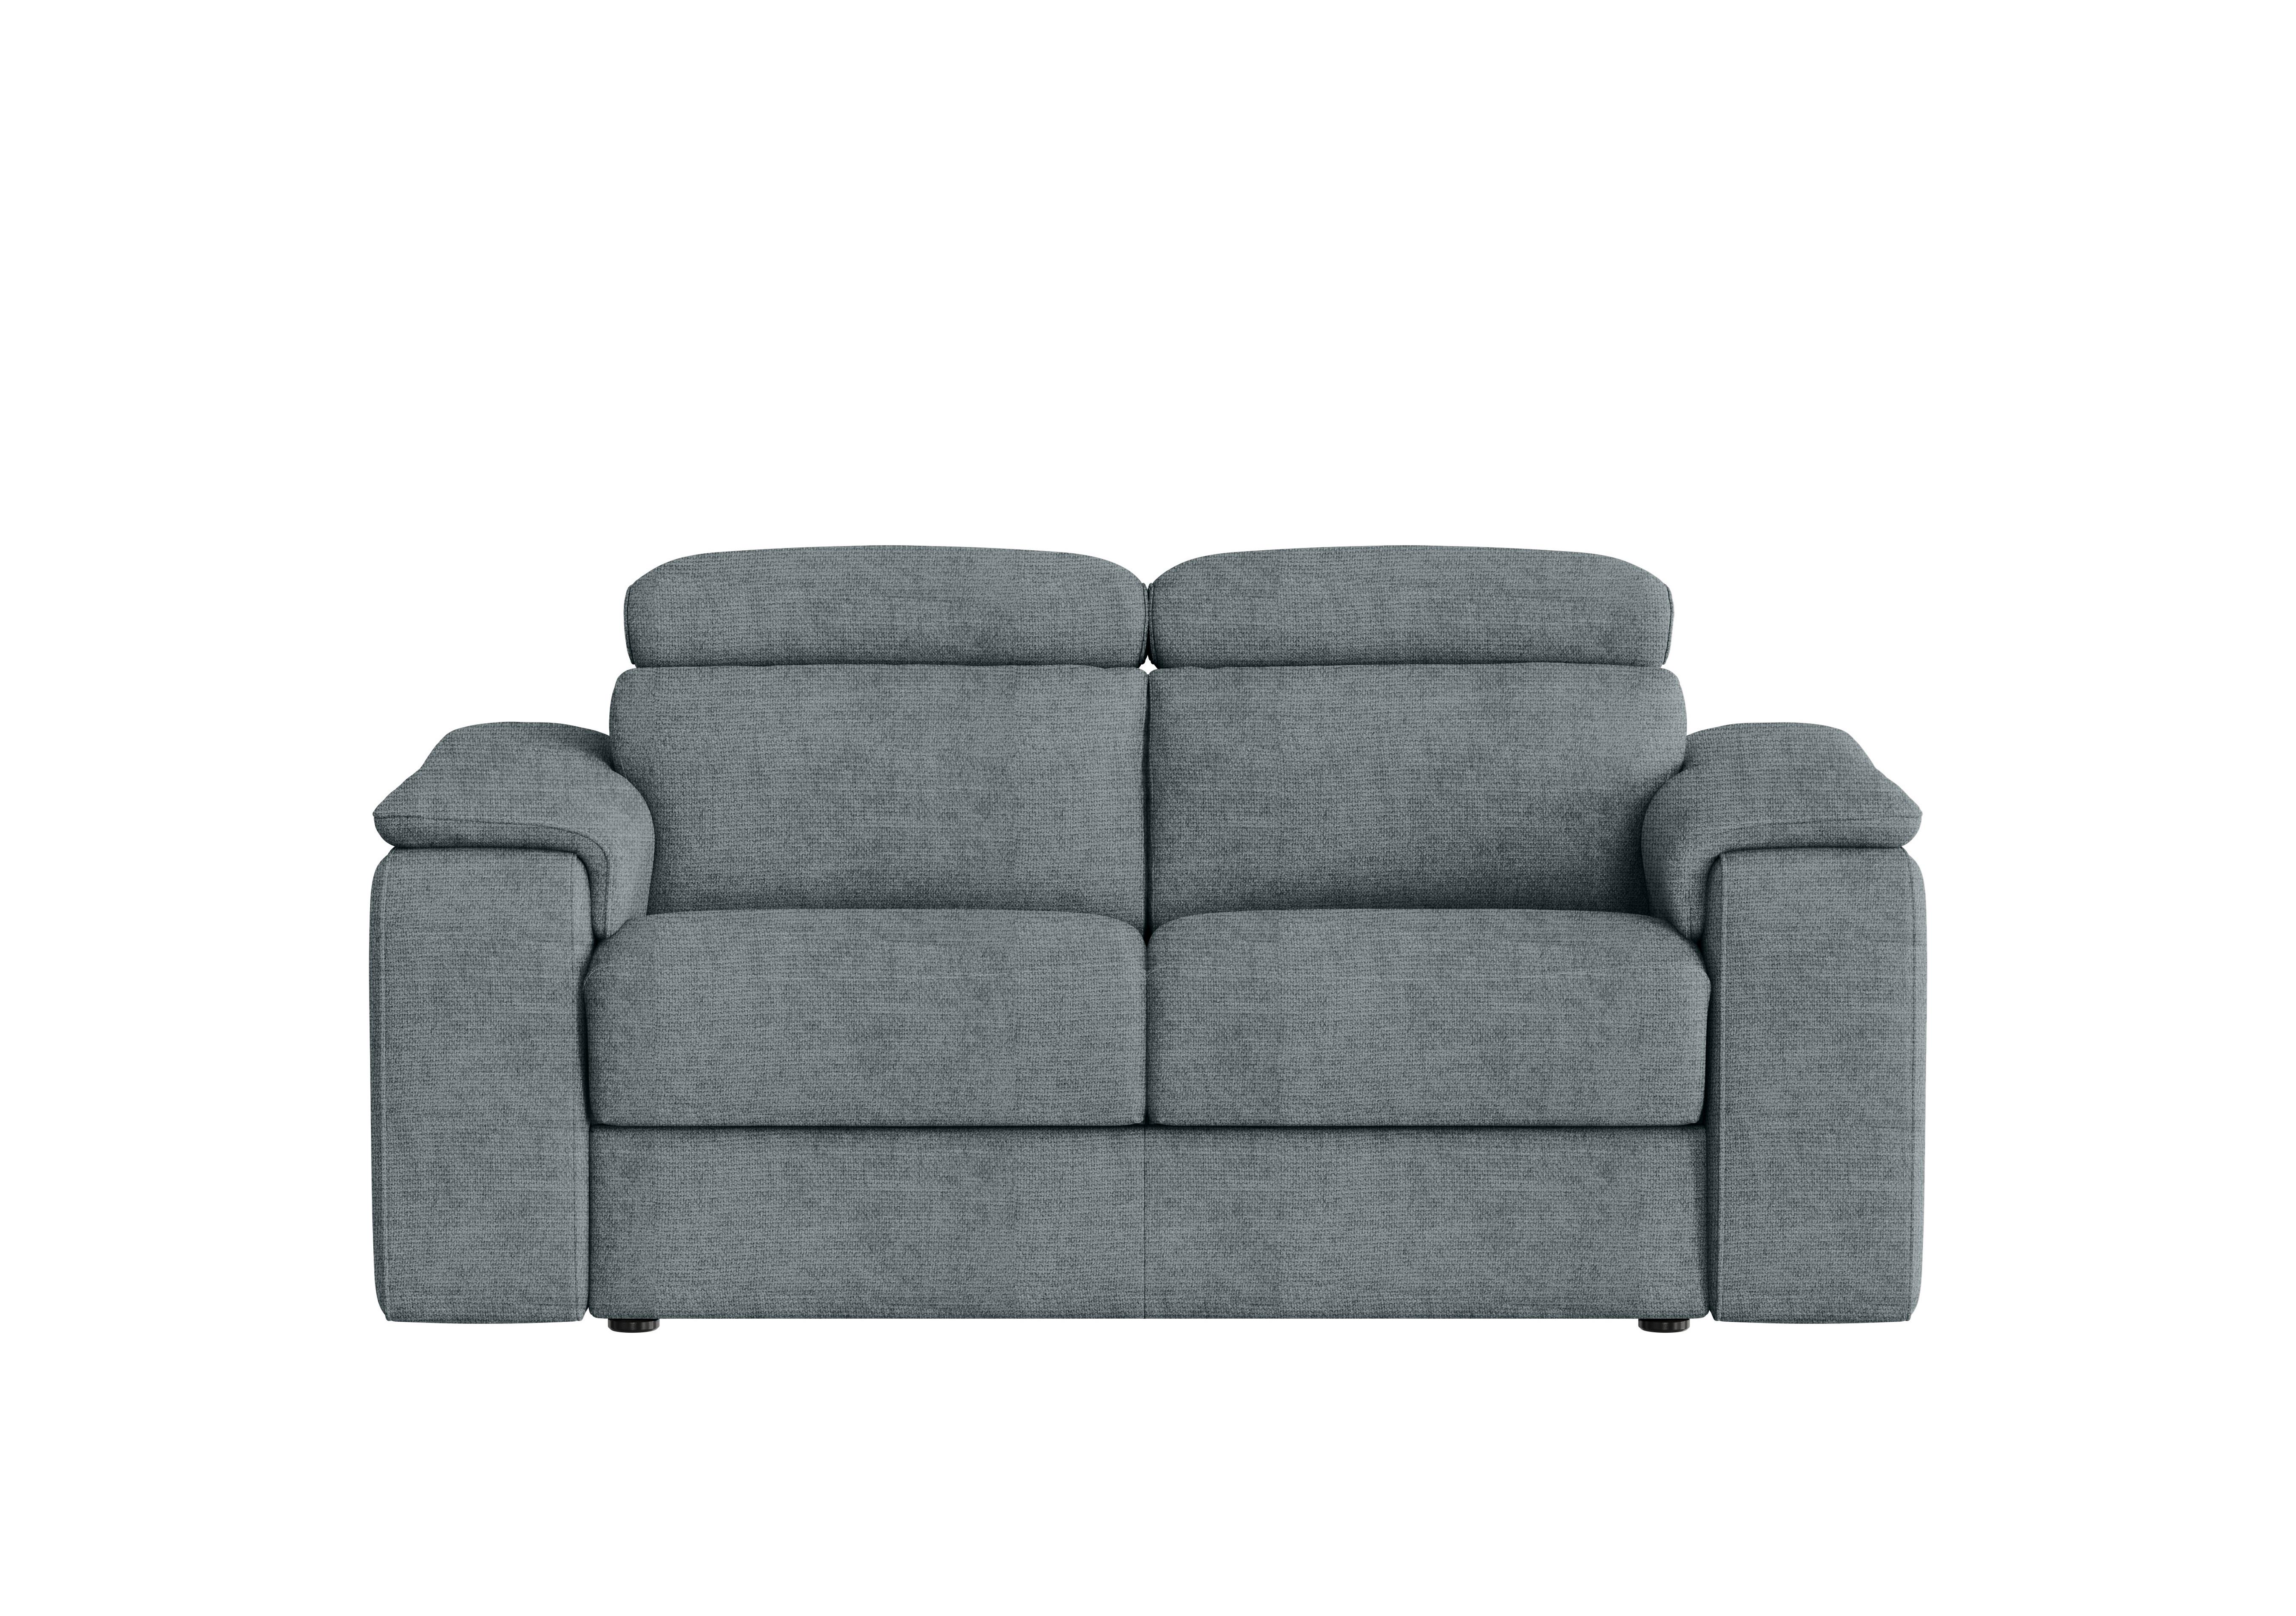 Davide 2 Seater Fabric Sofa in Baobab Grigio 546 on Furniture Village